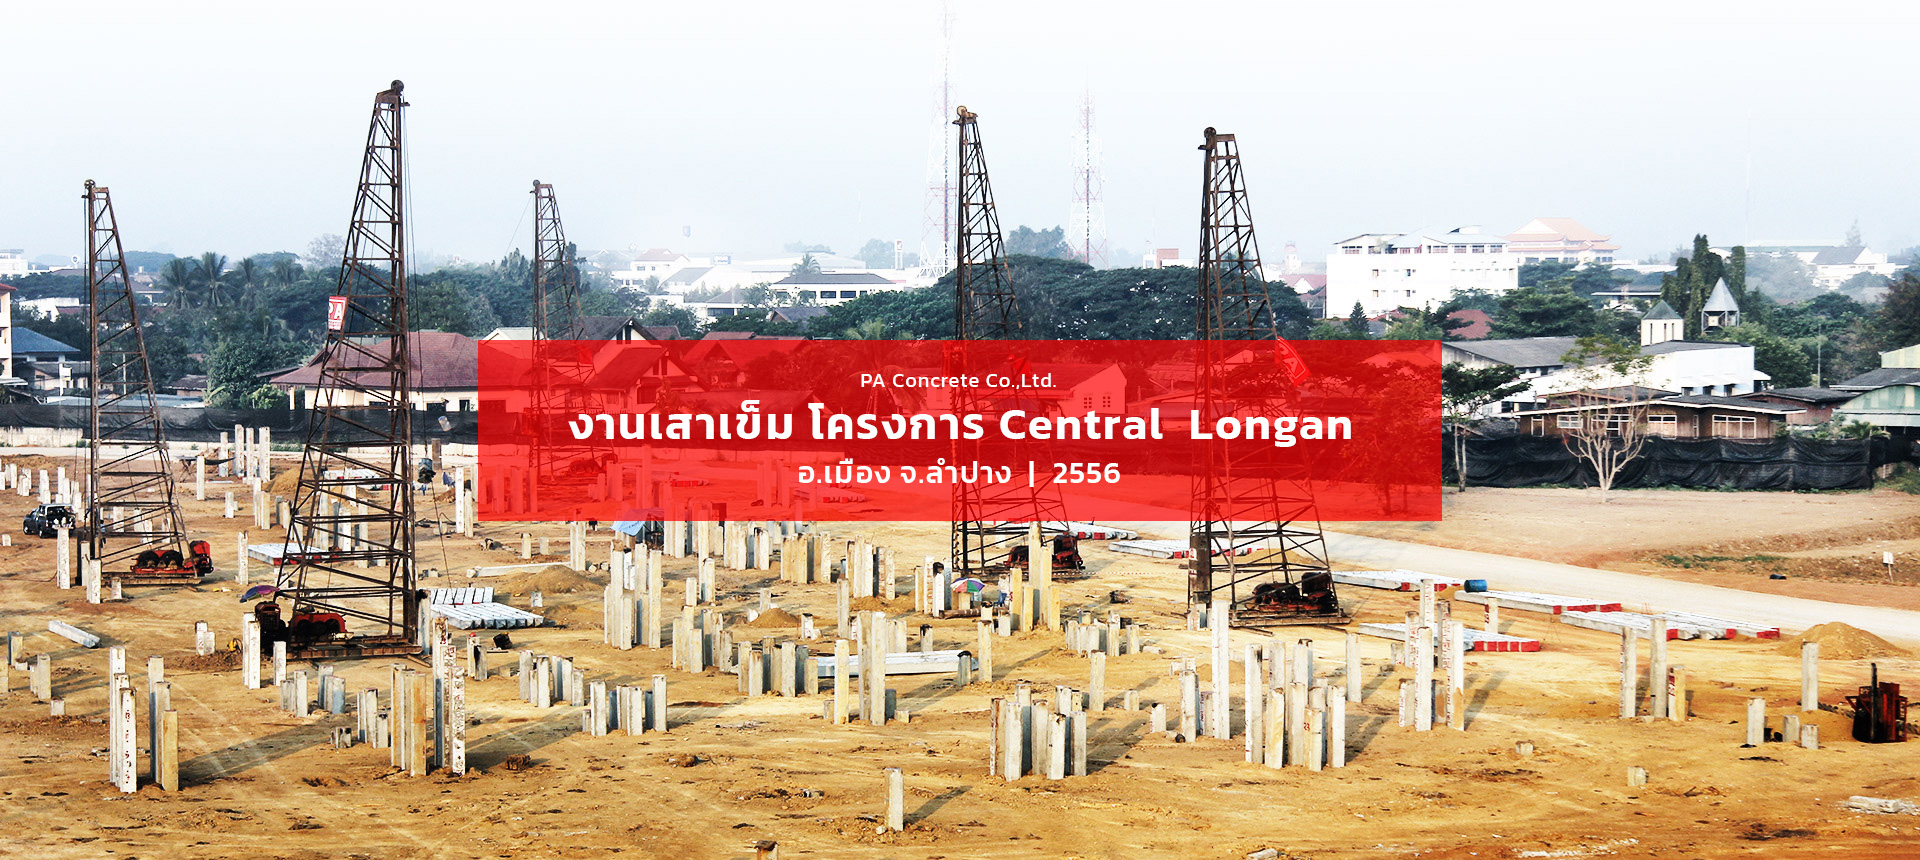 central-longan-our-work-PA-concrete